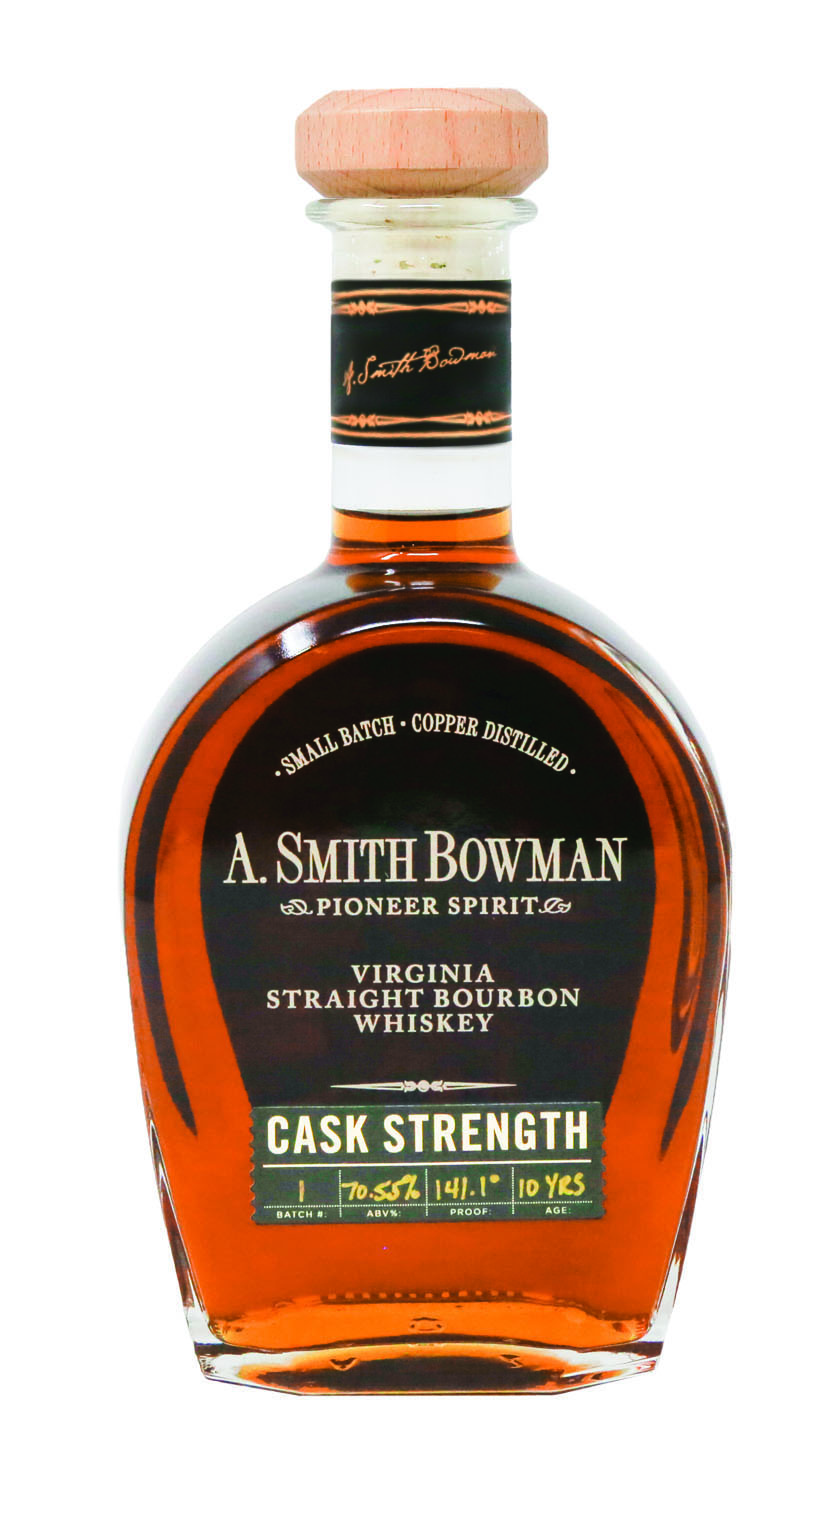 A. Smith Bowman Adds Cask Strength Bourbon To Core Range SpiritedZine